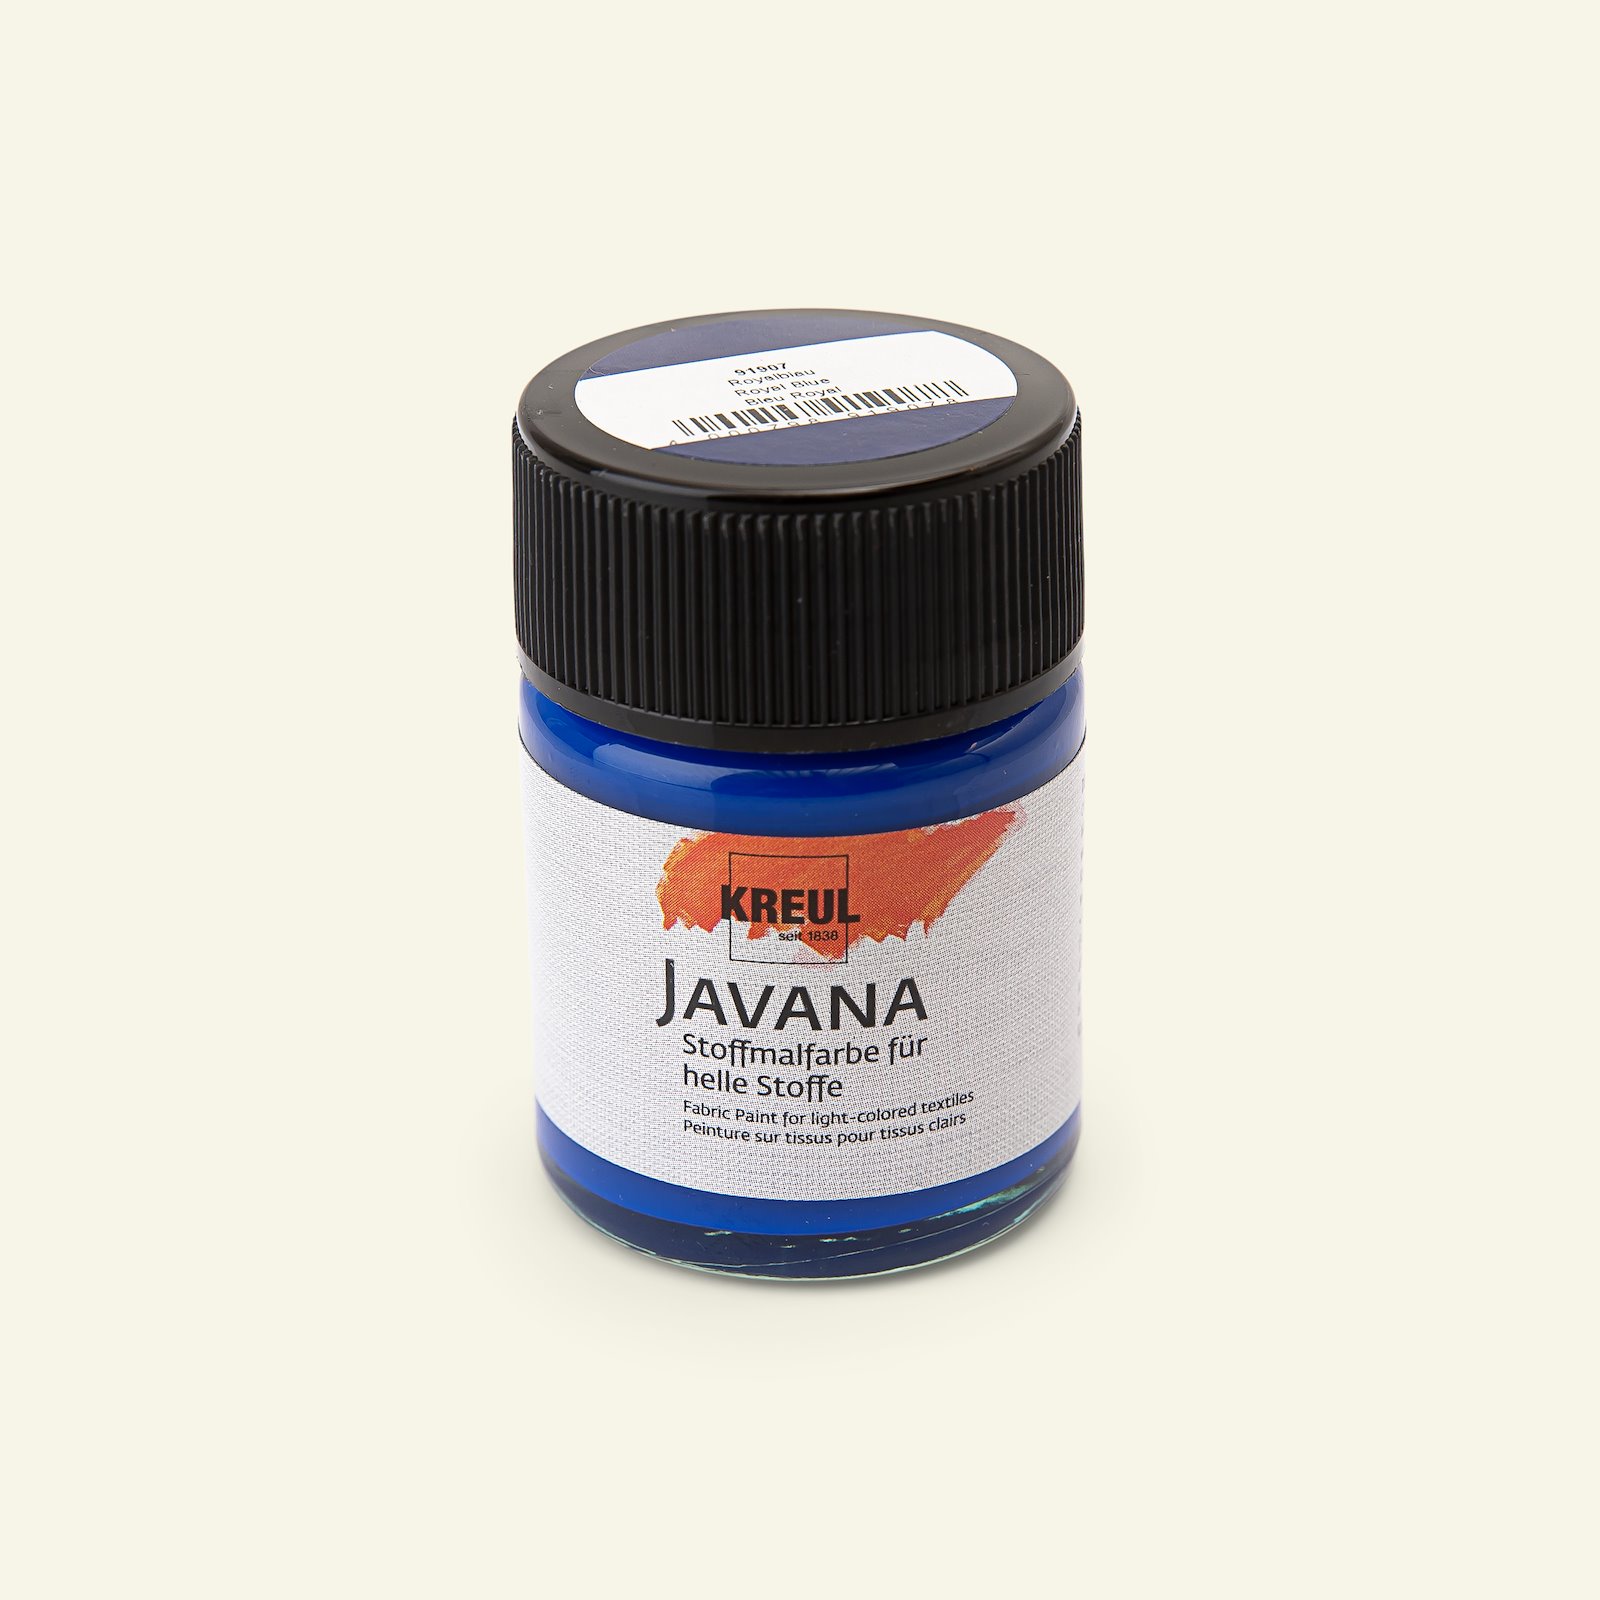 Javana tekstilfarve, kongeblå, 50ml 29612_pack_b